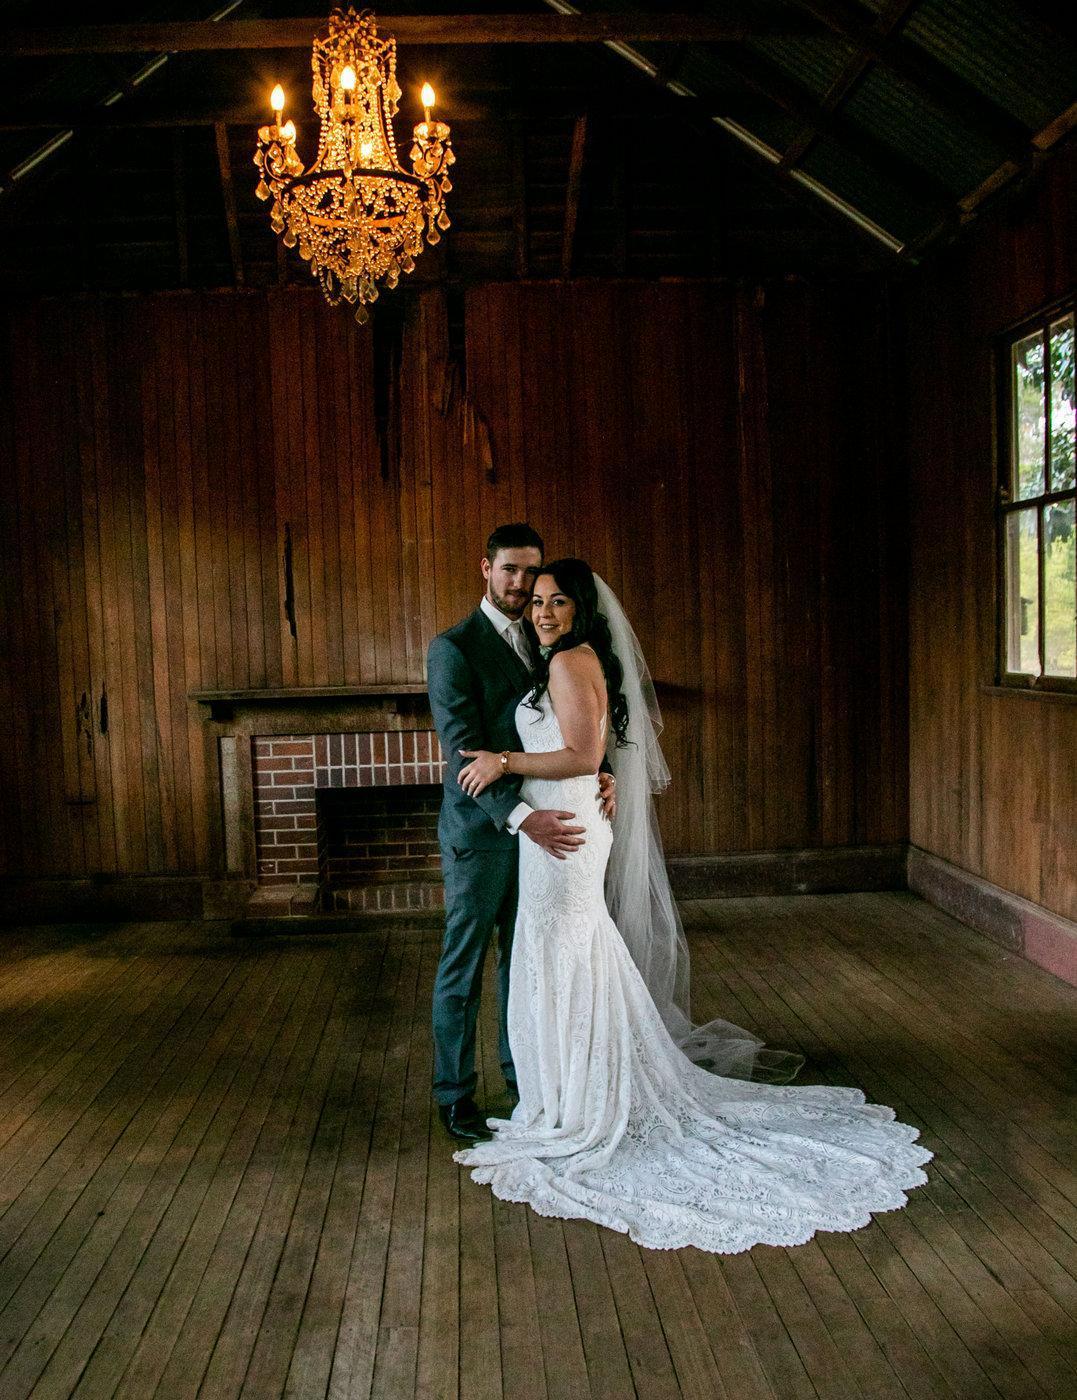 Wedding Photography couple in rustic barn